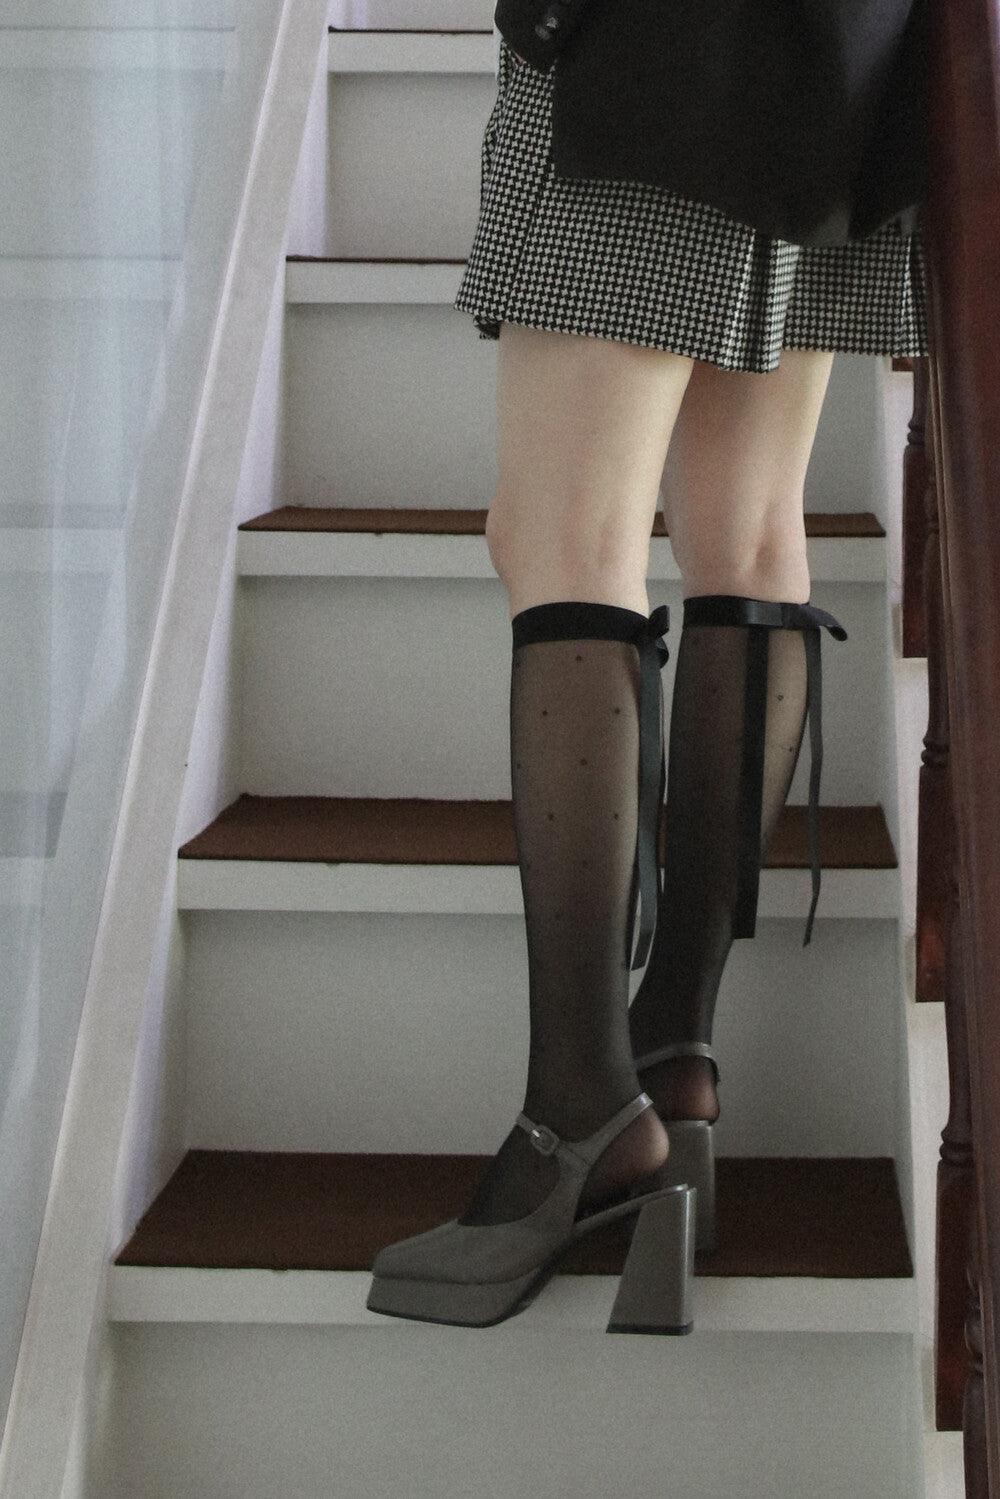 dot ribbon half stockings (2colors) タイツ/ストッキング - 4MiLi (フォーミリ)